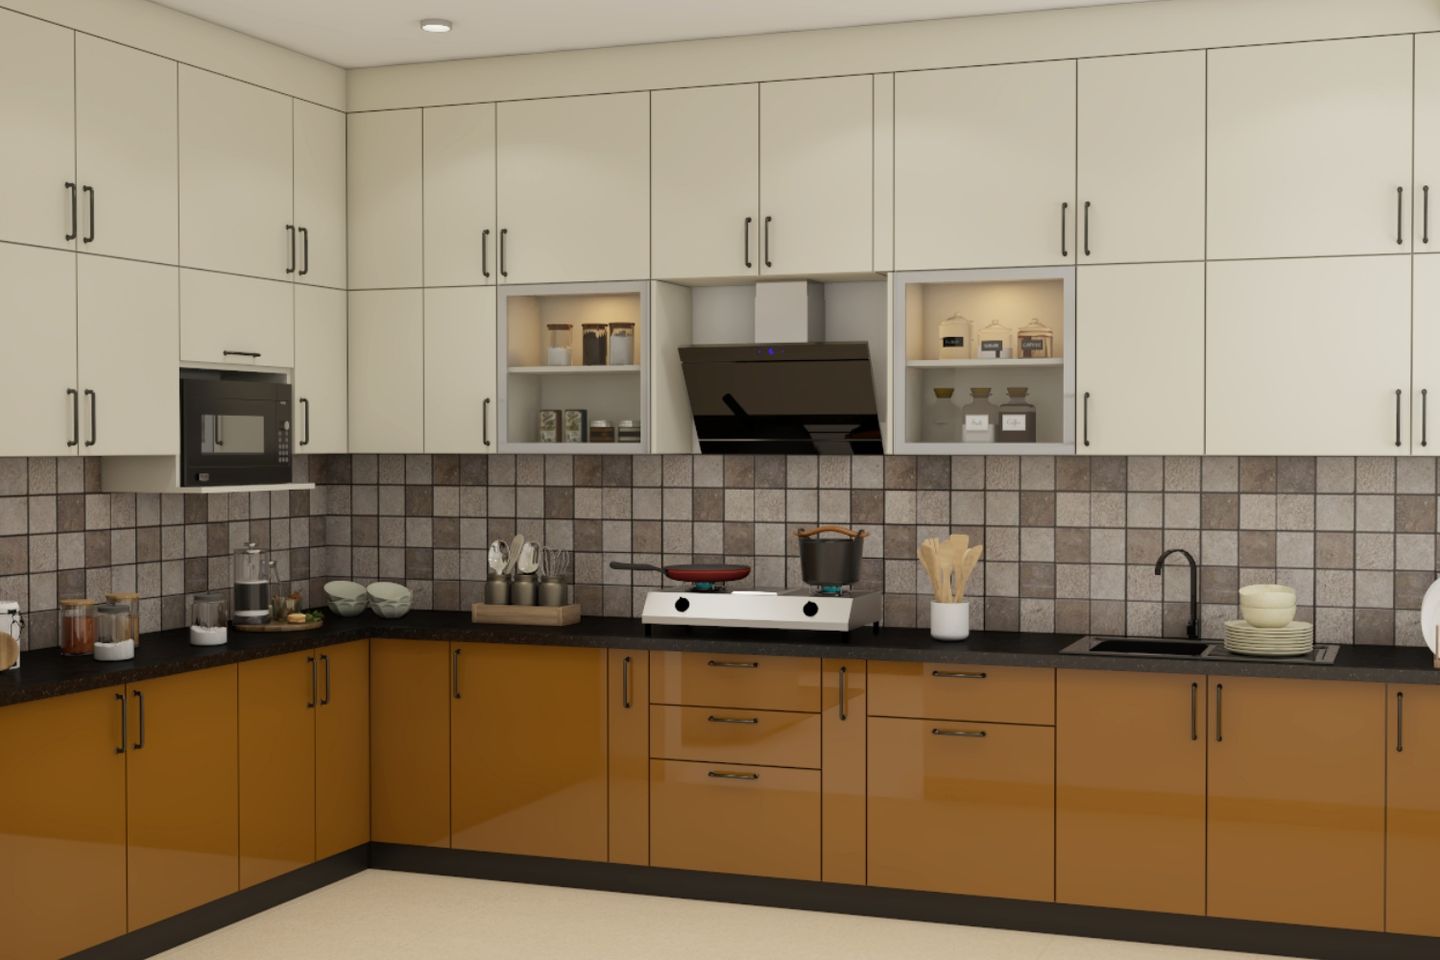 13X11 Ft L-Shaped Kitchen Design With A Granite Countertop - Livspace